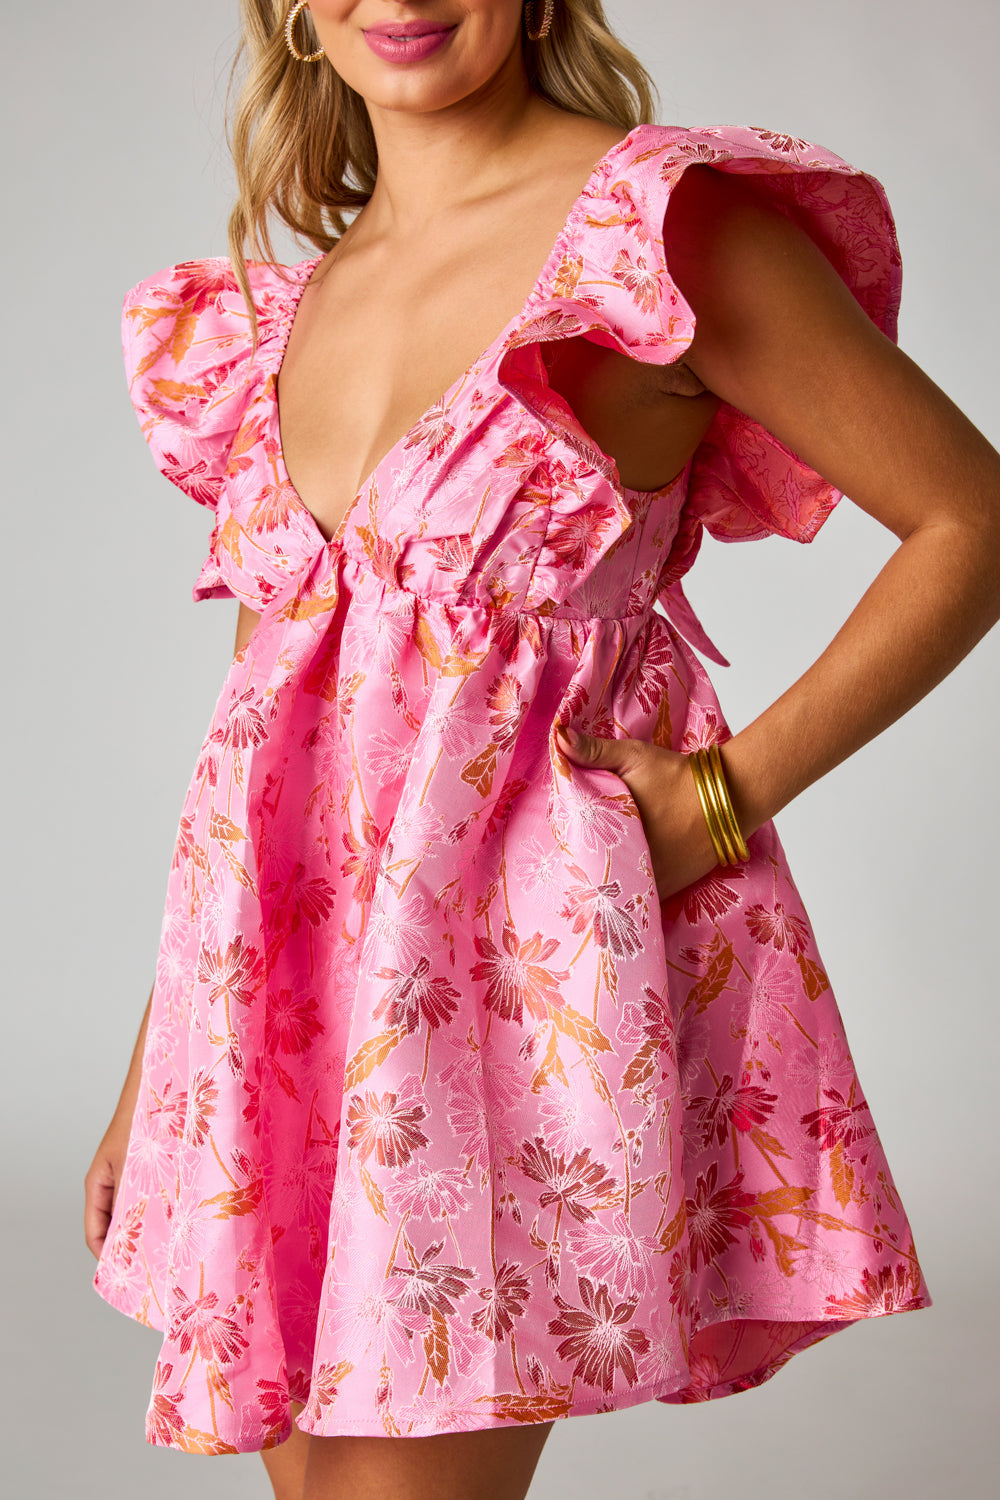 Regal Poise Dress - Pink